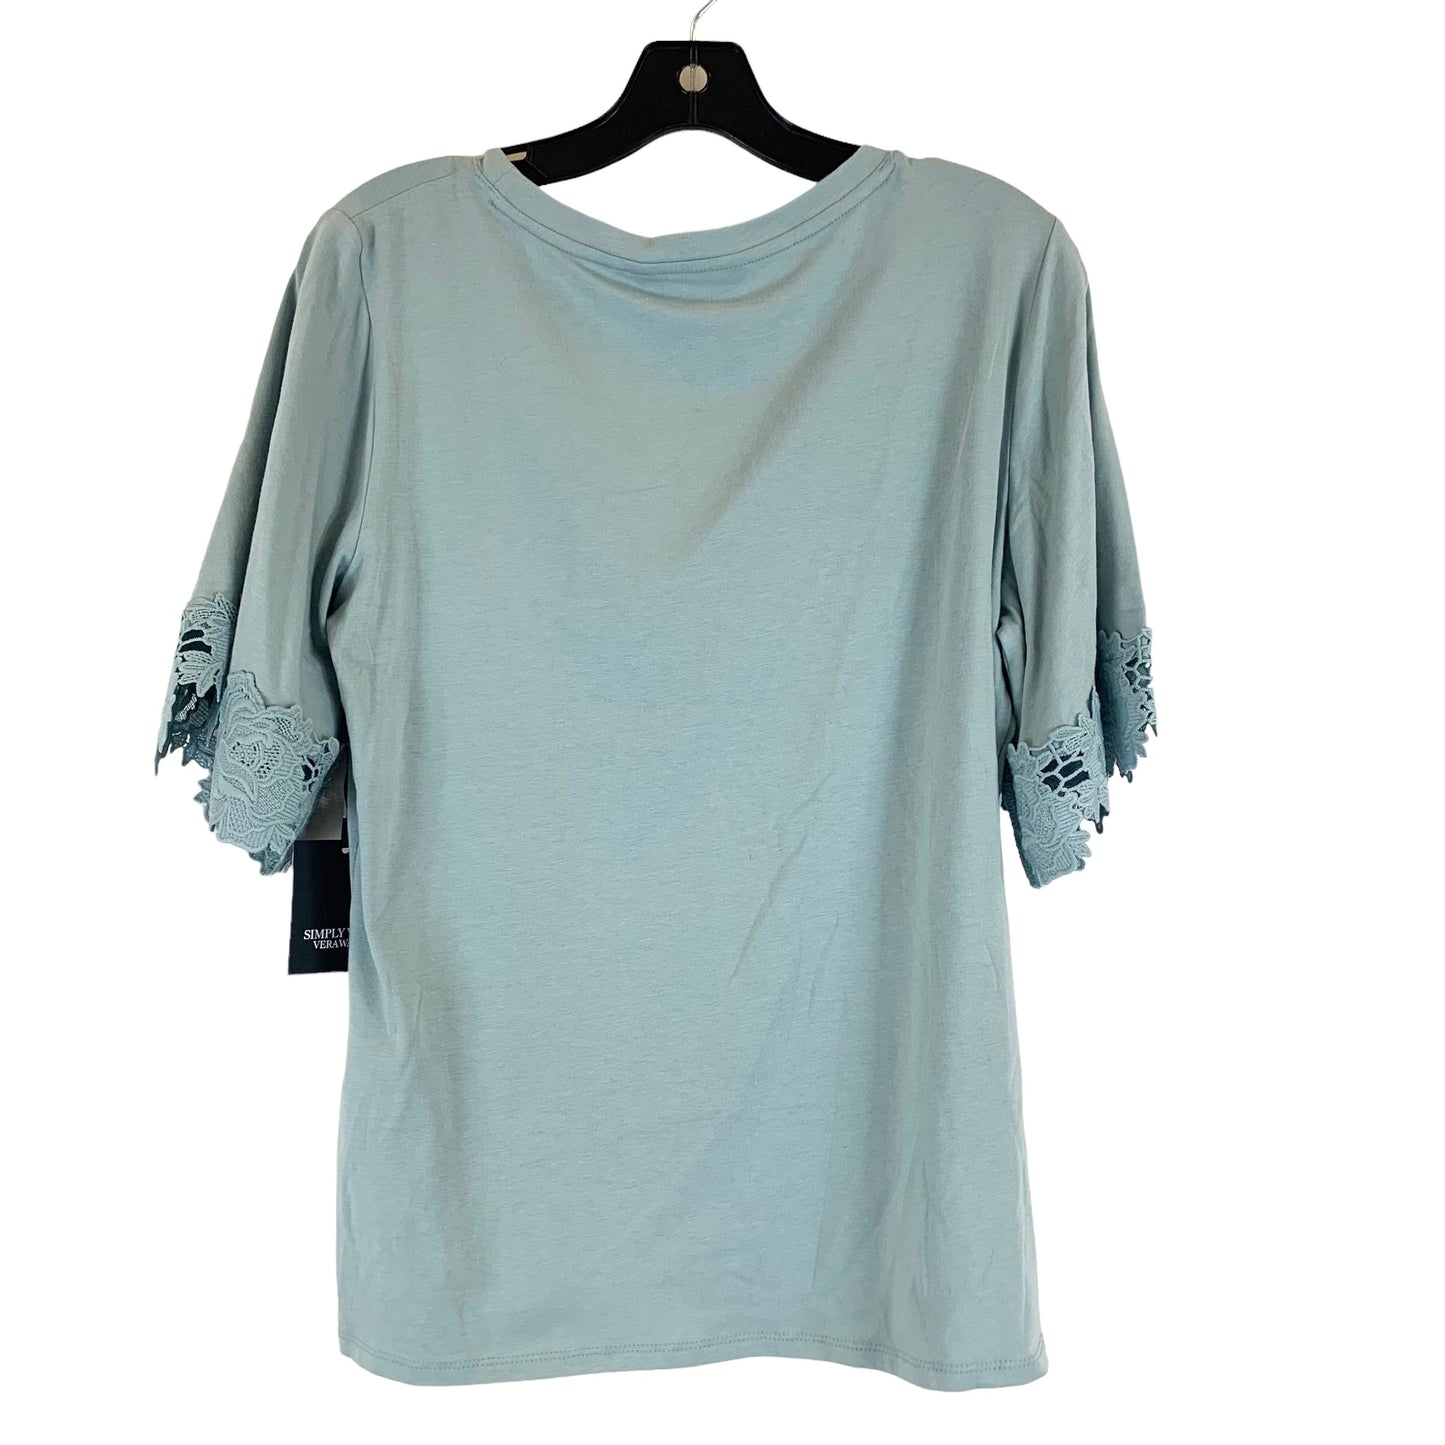 Blue & Grey Top Short Sleeve Basic Simply Vera, Size L